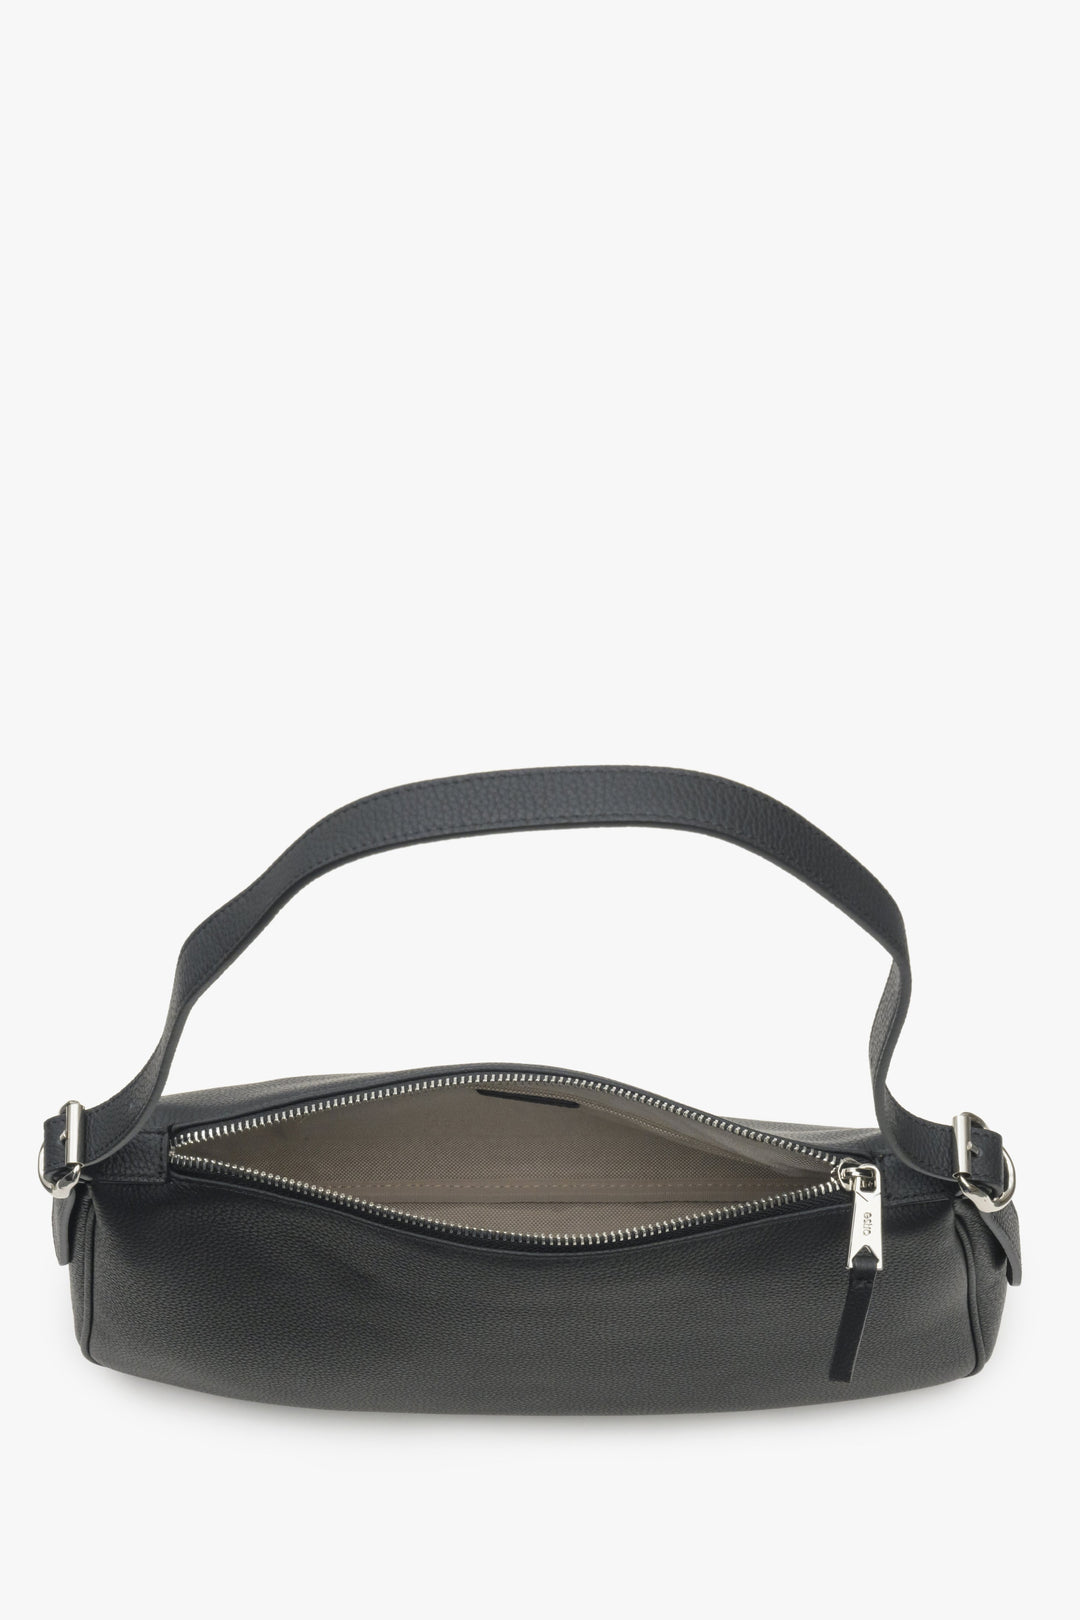 Women's black leather shoulder bag by Estro.